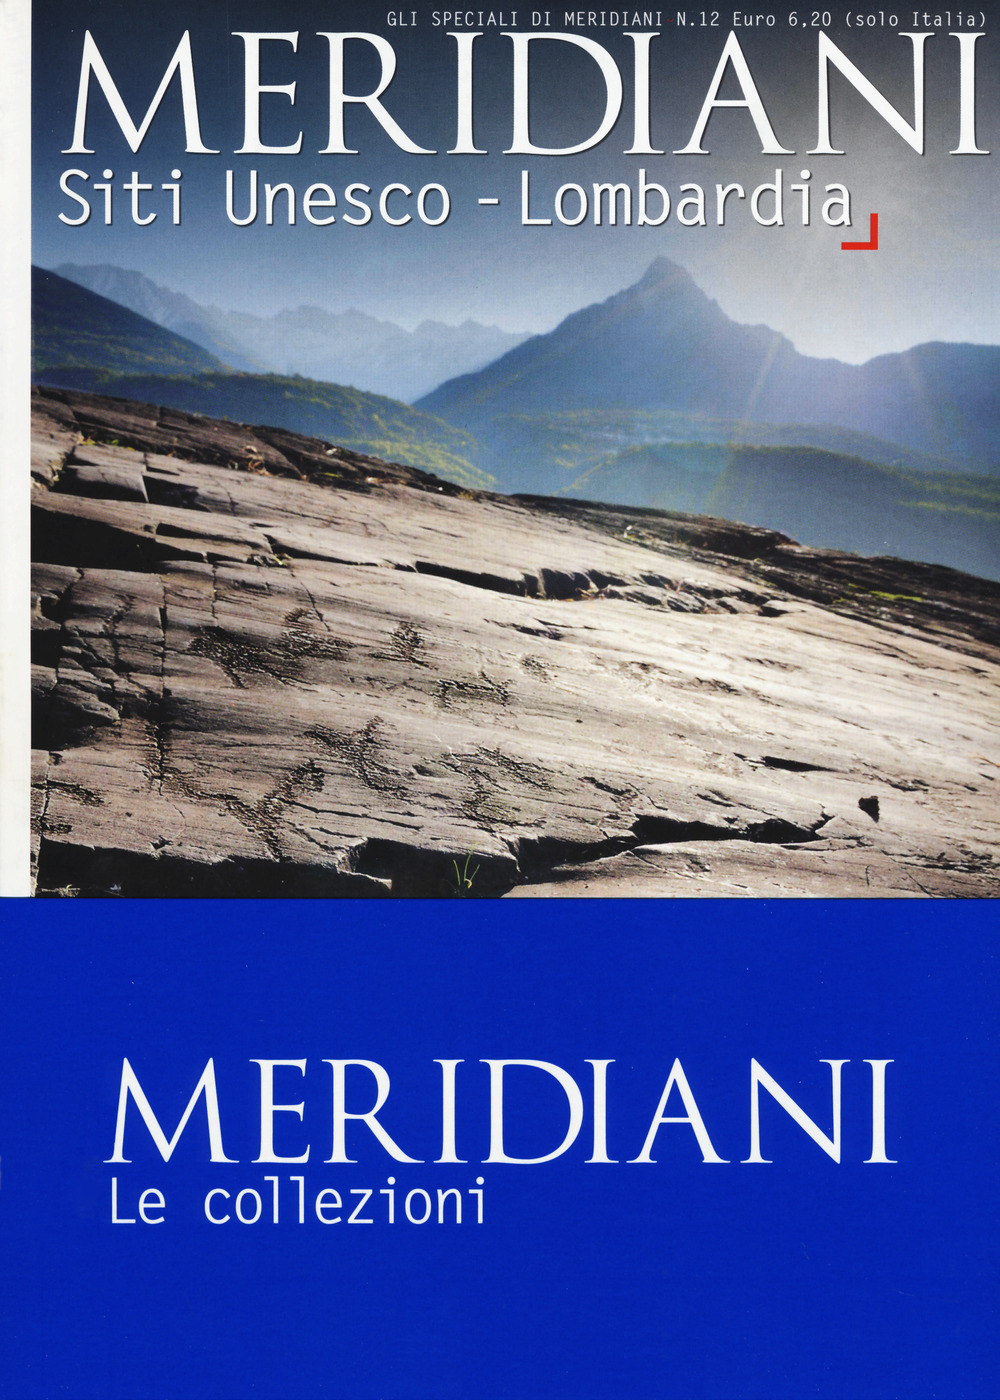 Pianura Padana-Siti Unesco Lombardia